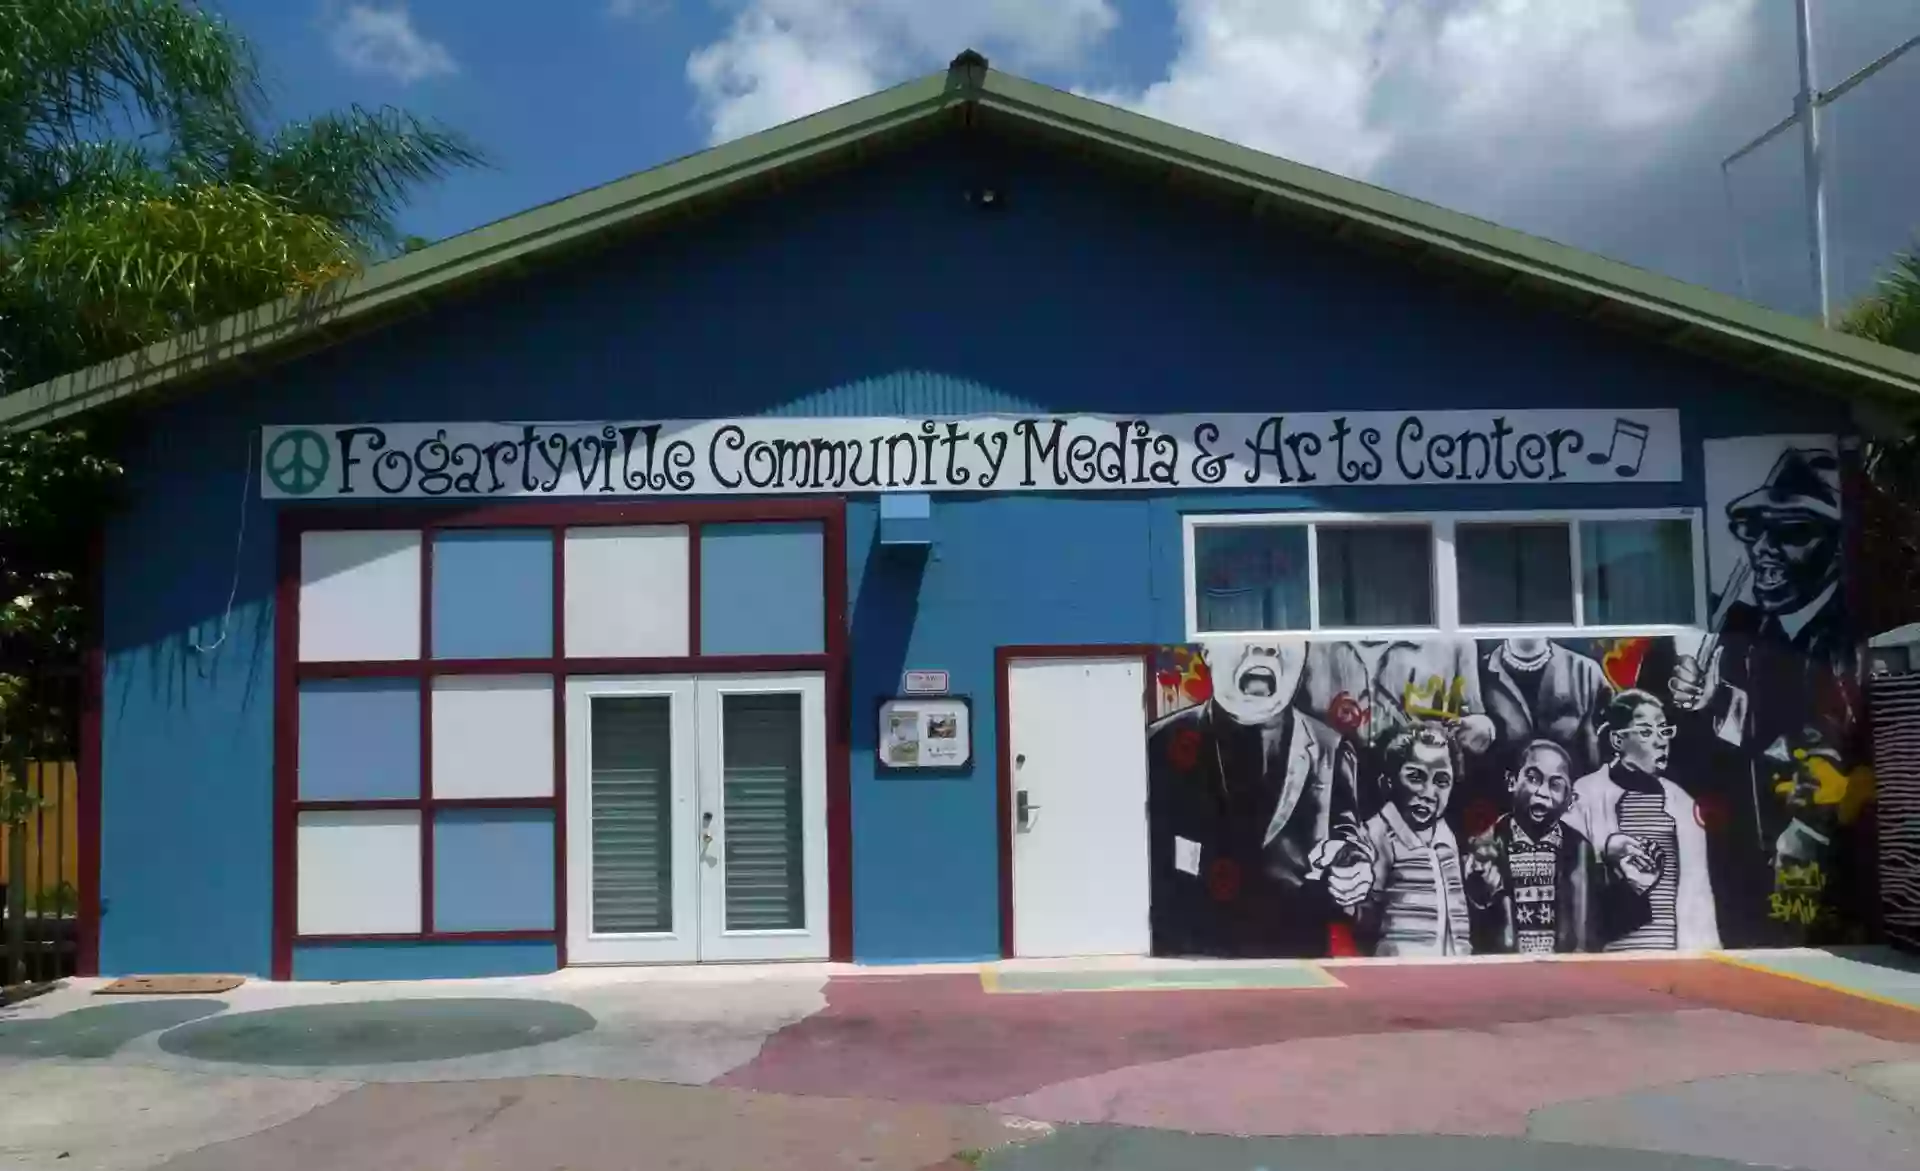 Fogartyville Community Media and Arts Center